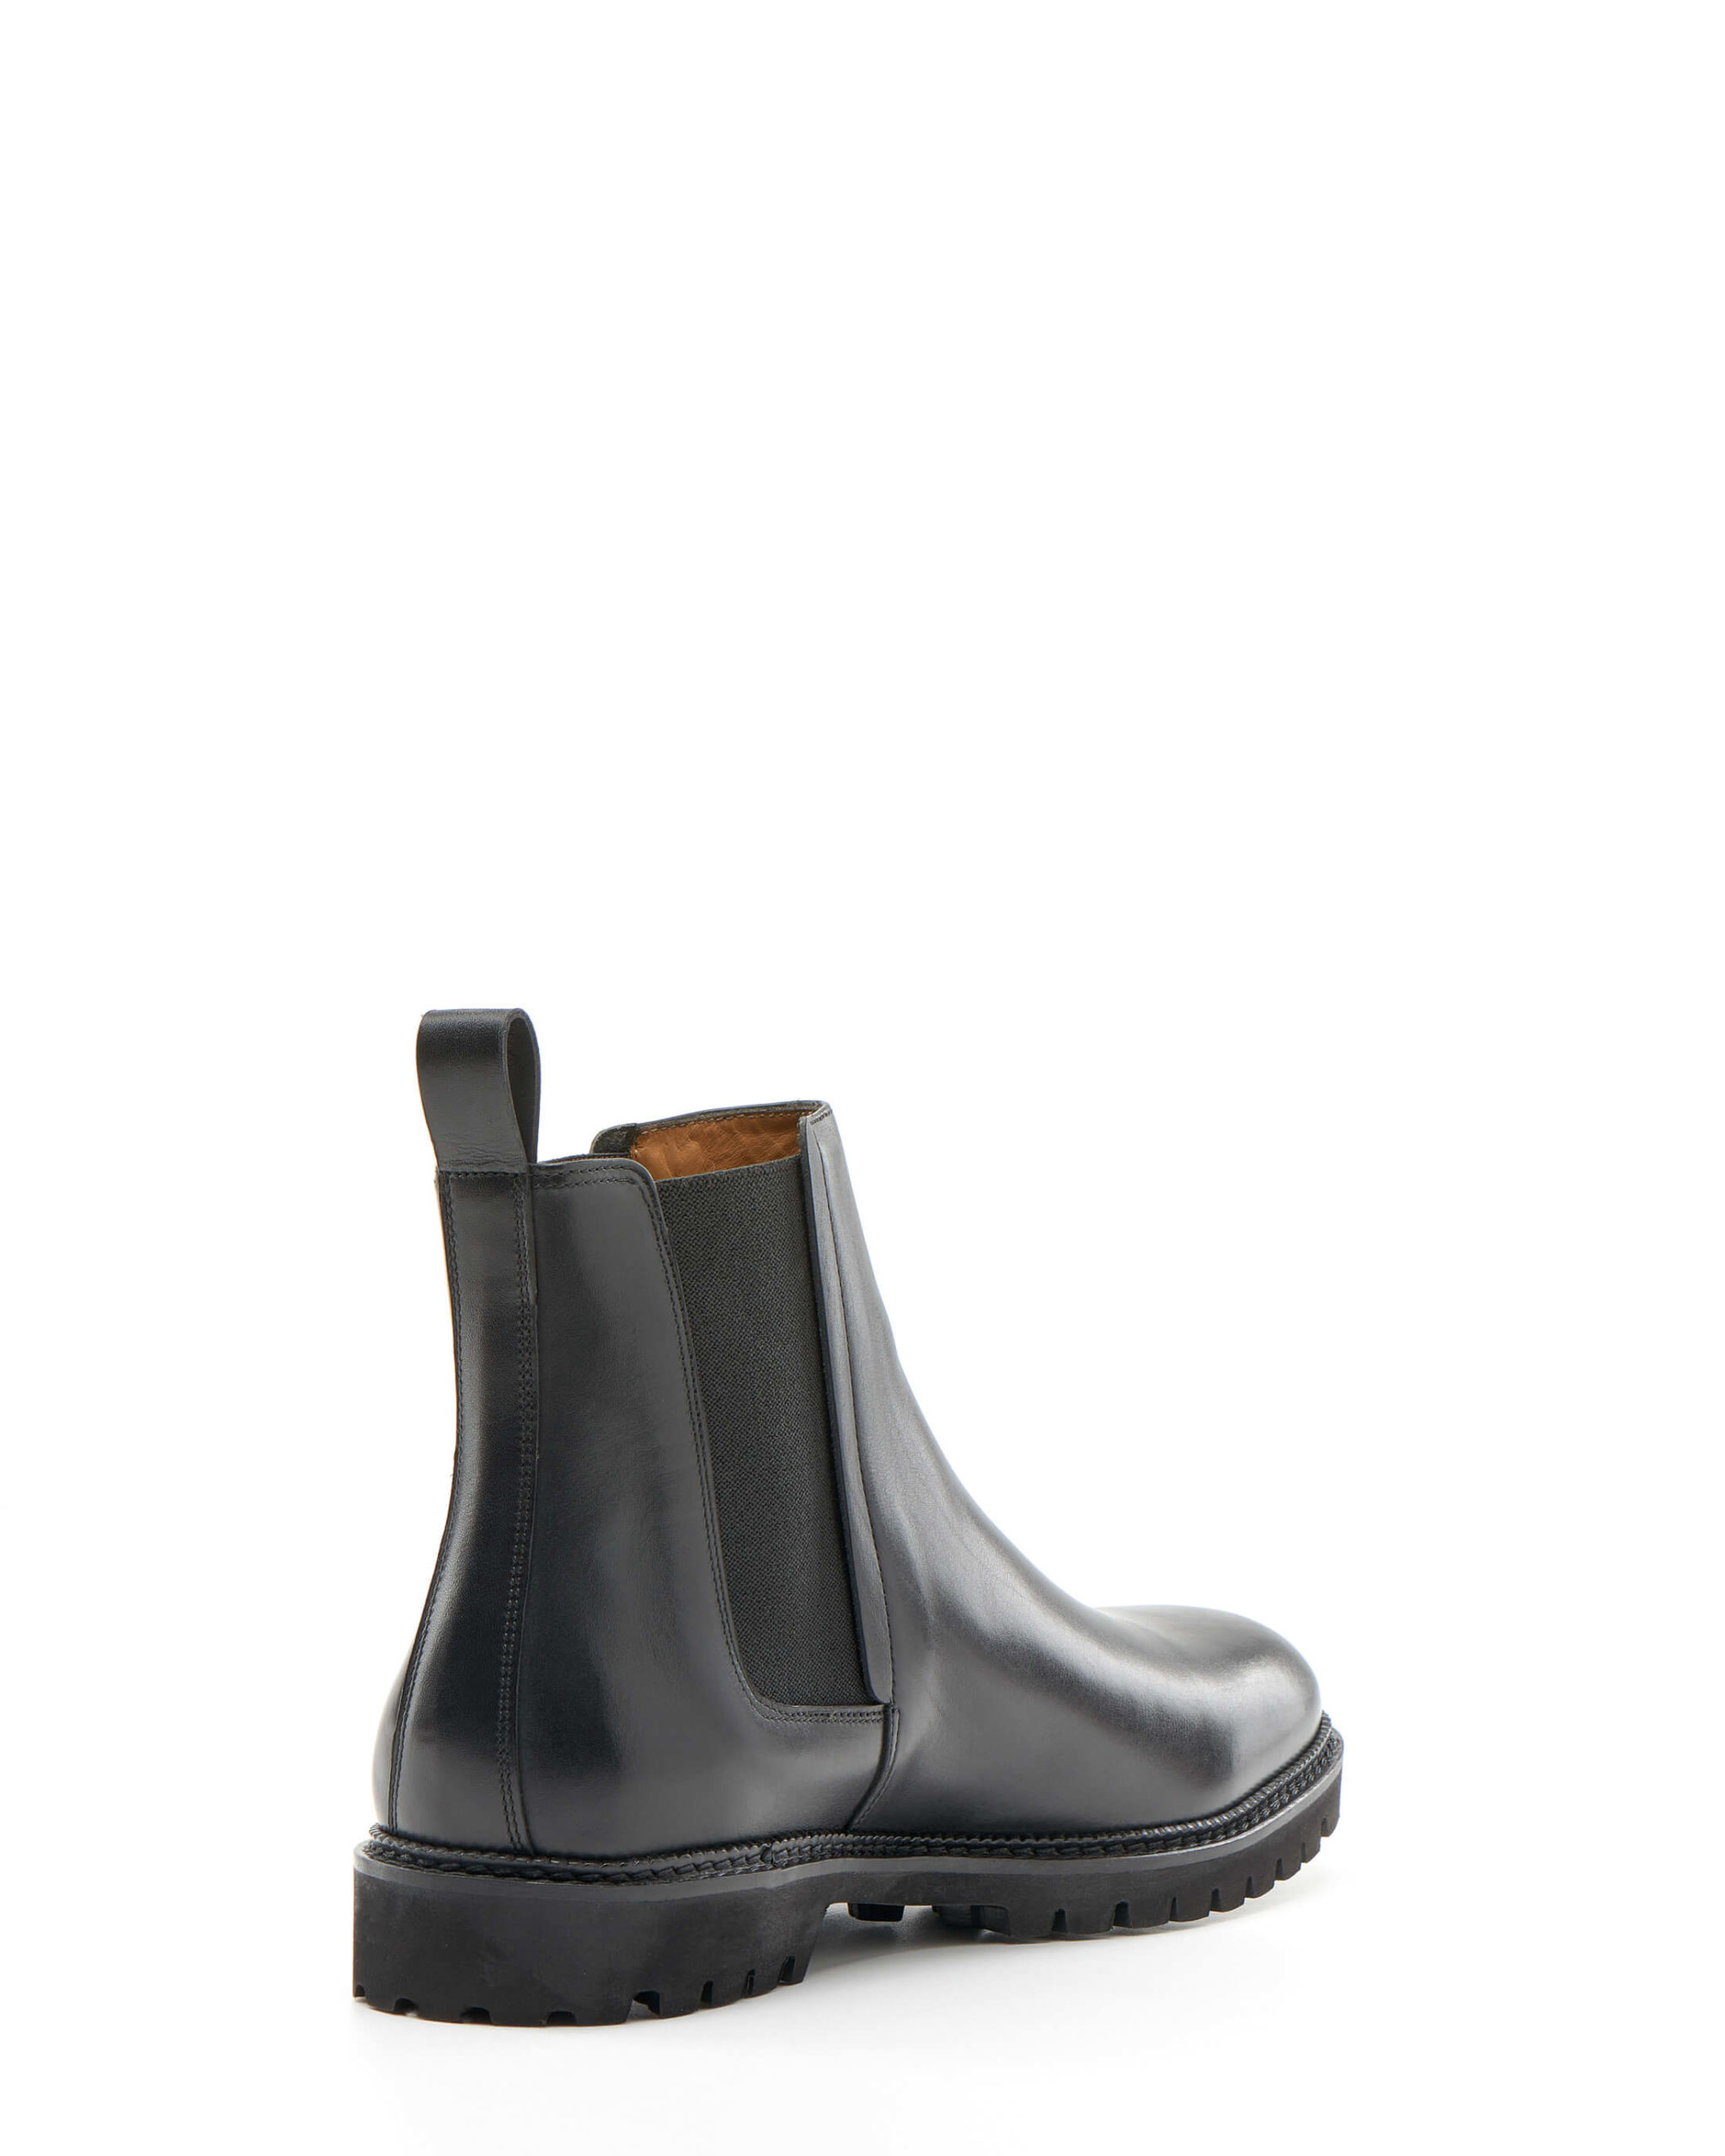 Luis Onofre Portuguese Shoes FW22 – HB0790_02 – Corretto Black-3